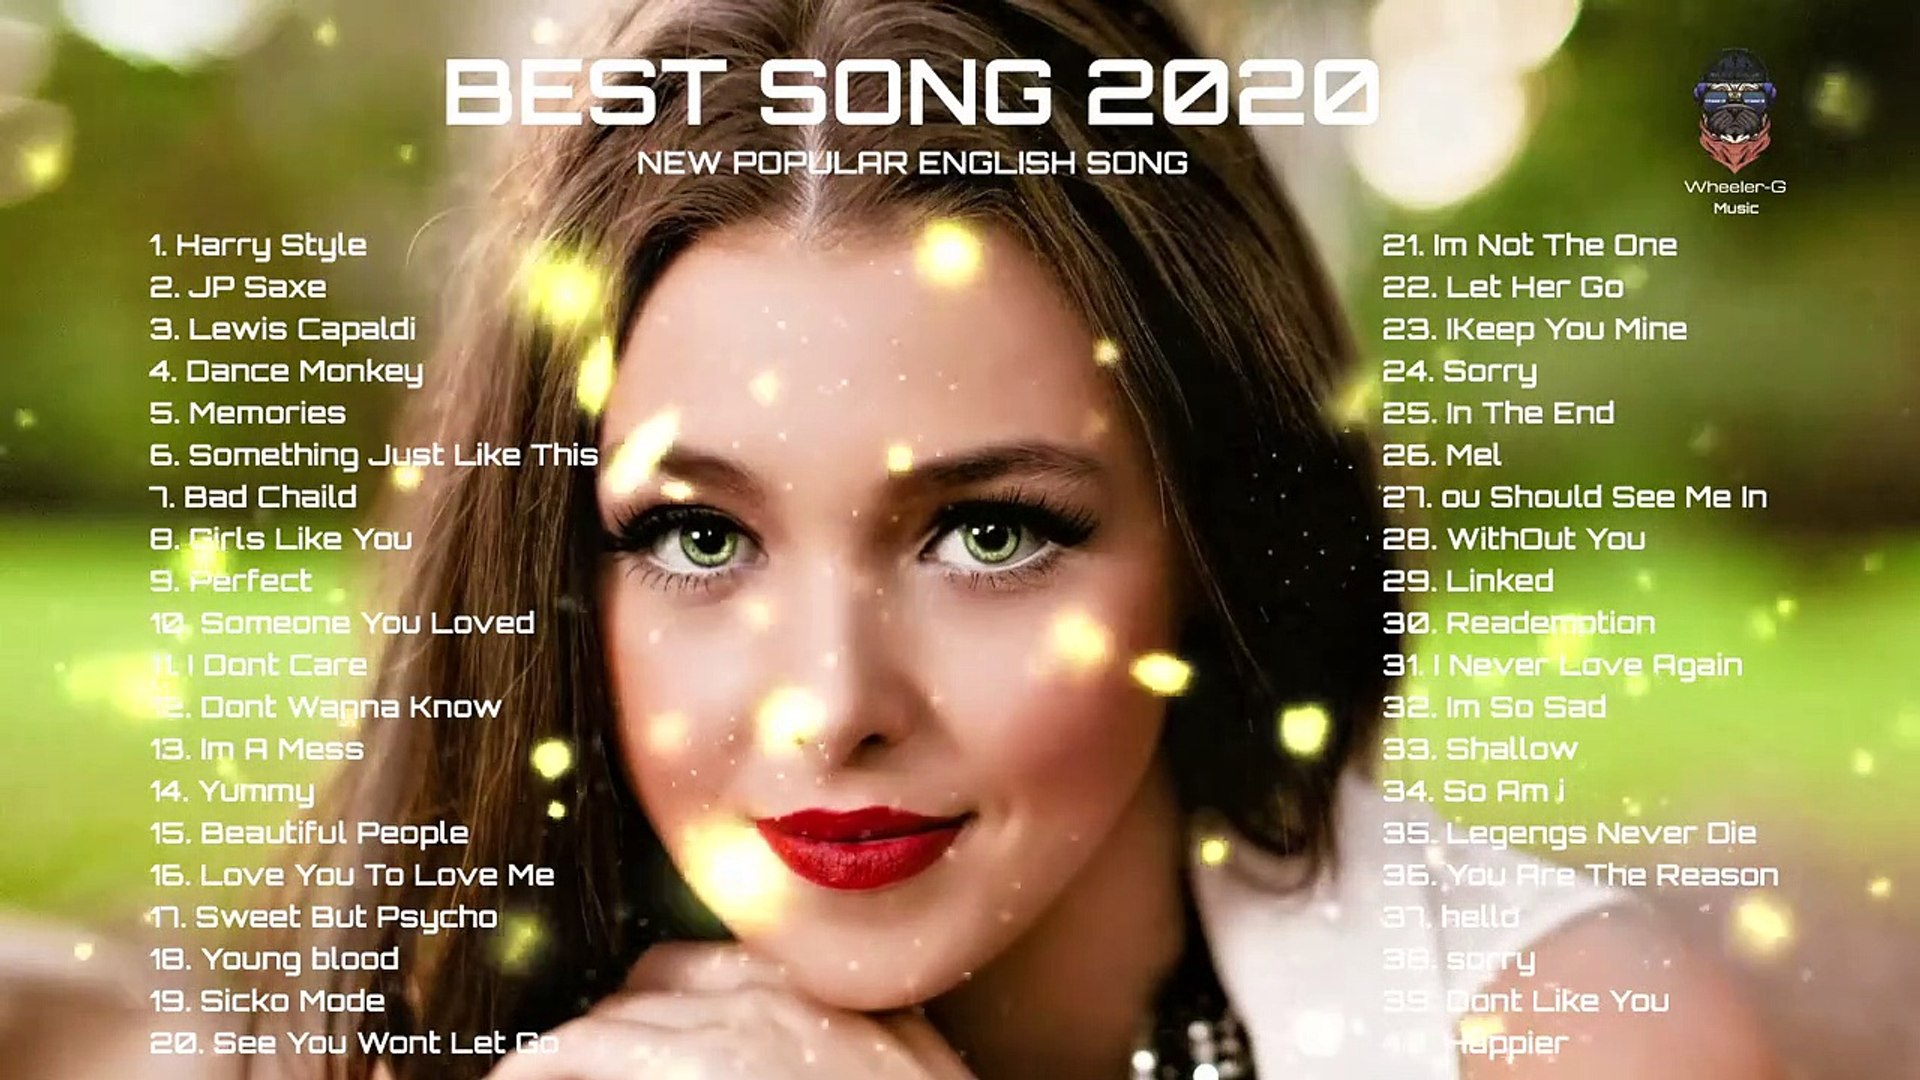 Top 40 Popular Songs 2020 Playlist - Top Music Billboard 2020 [Wheeler_G]